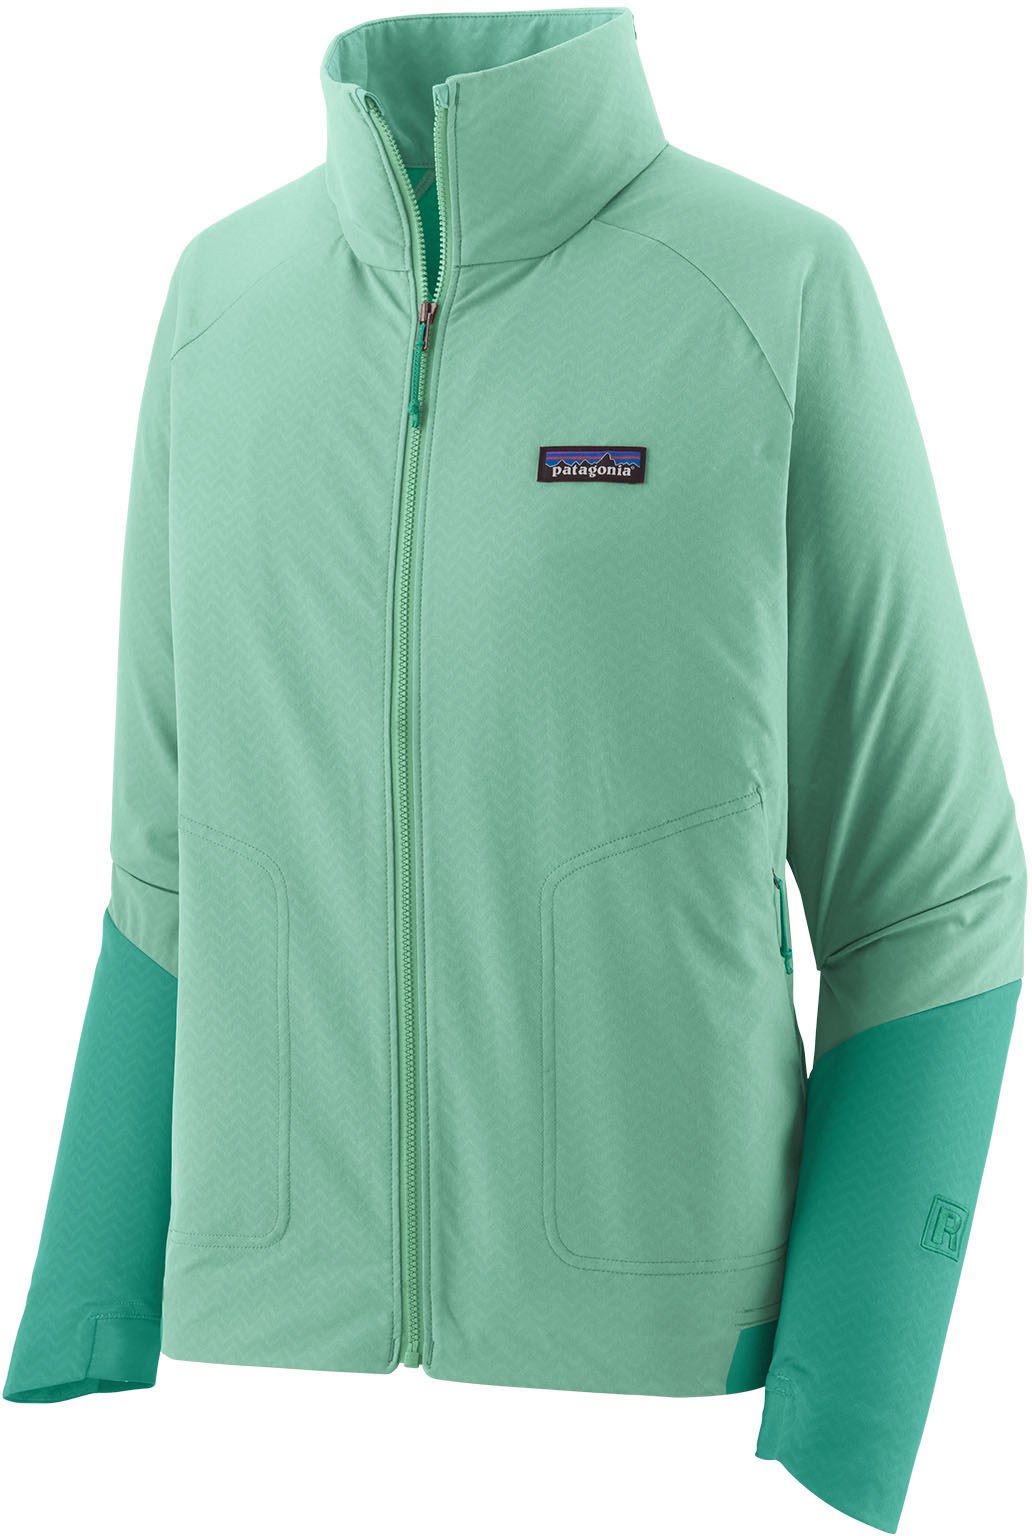 Куртка R1 CrossStrata — женская Patagonia, зеленый